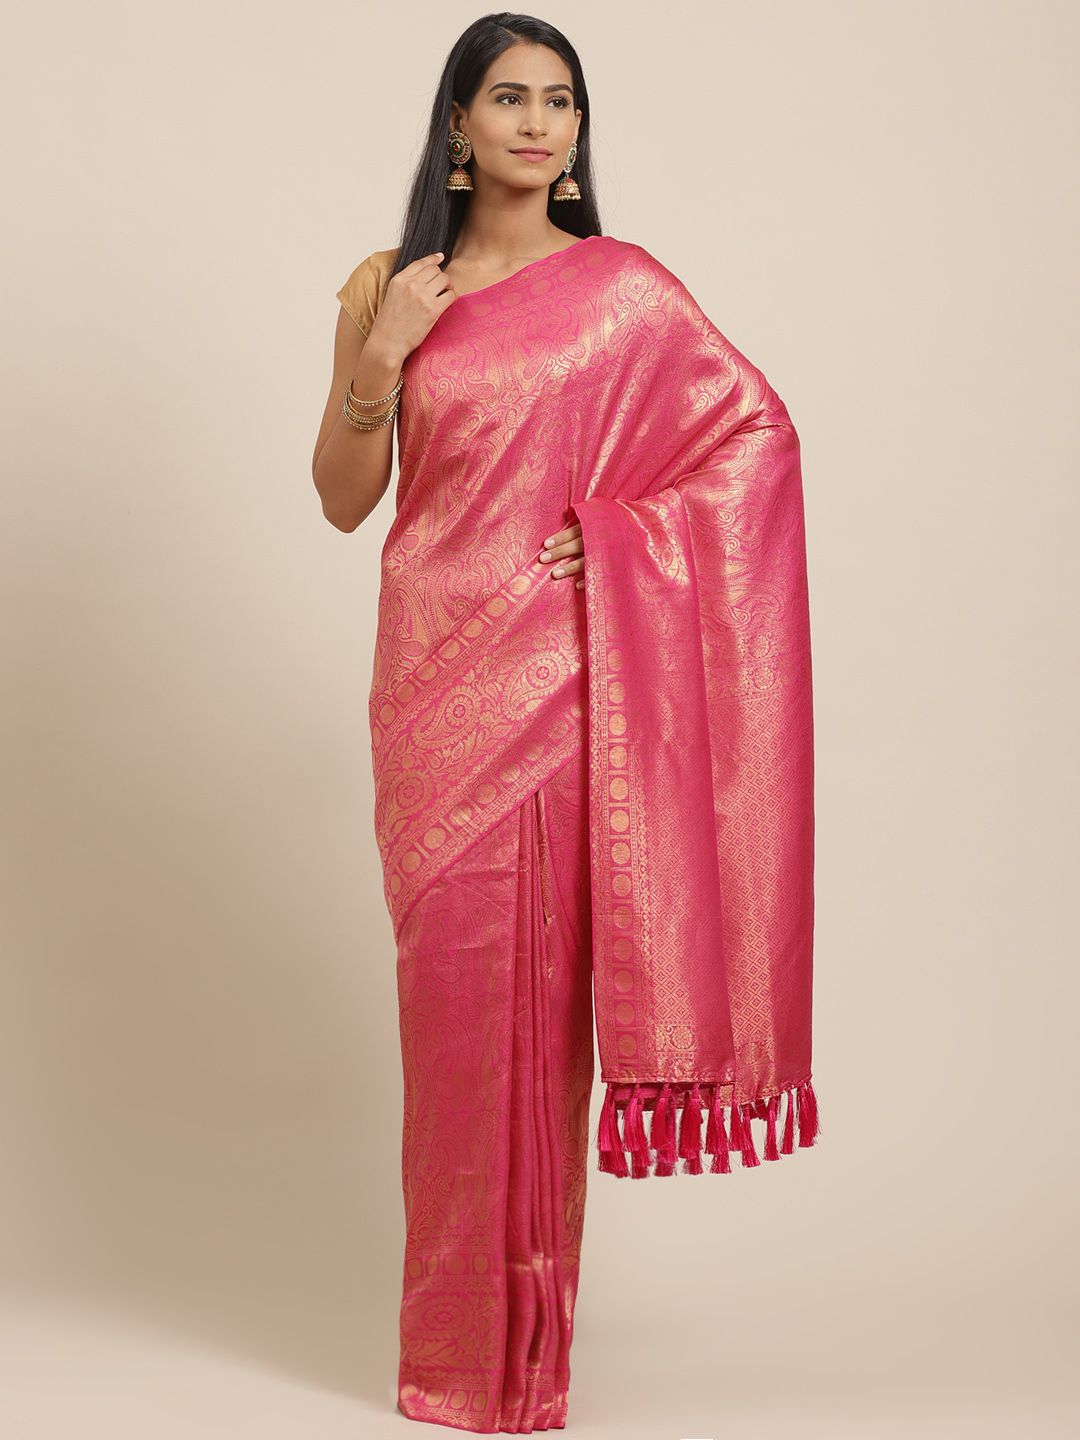 VASTRANAND Pink & Golden Woven Design Banarasi Saree Price in India